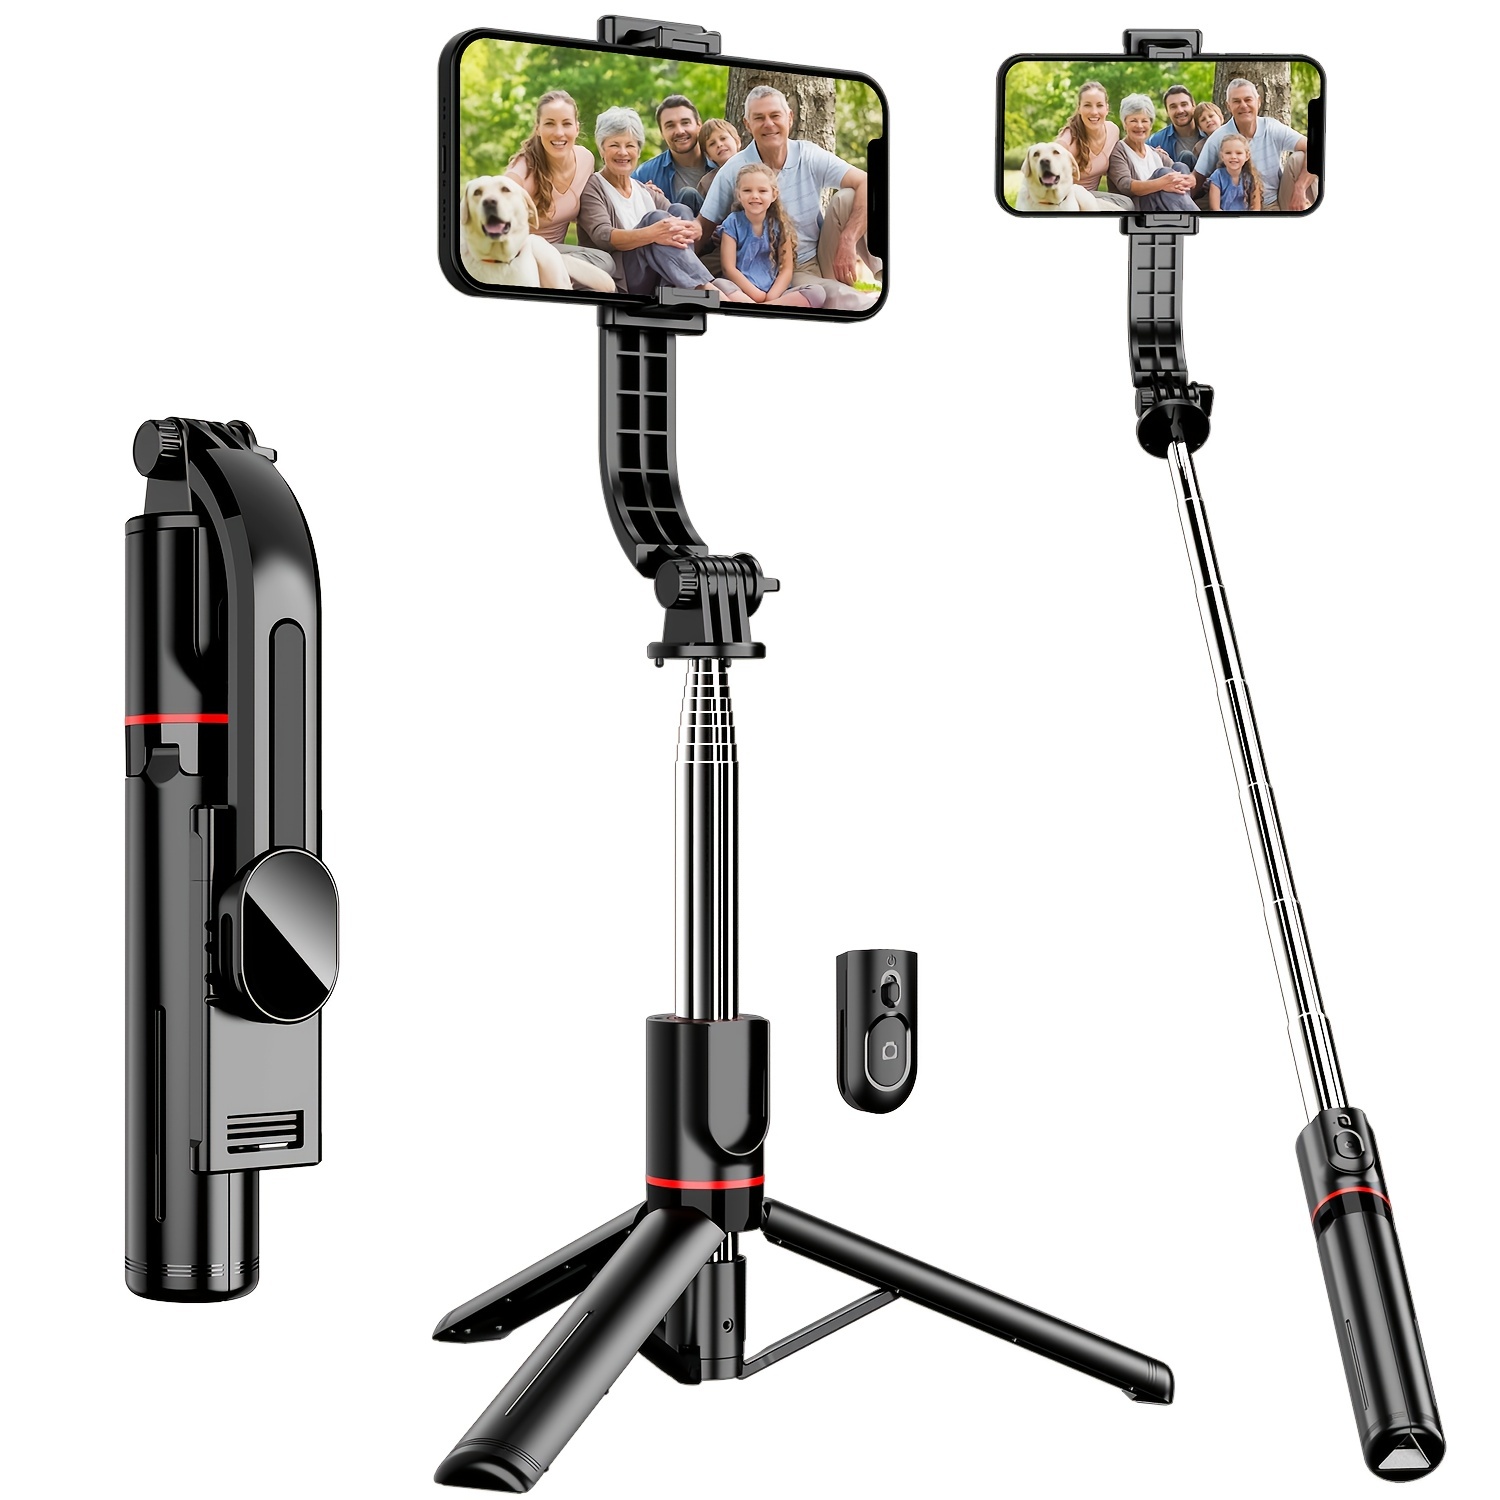 Palo Selfies Trípode Axnen Bluetooth Selfie Stick Remoto